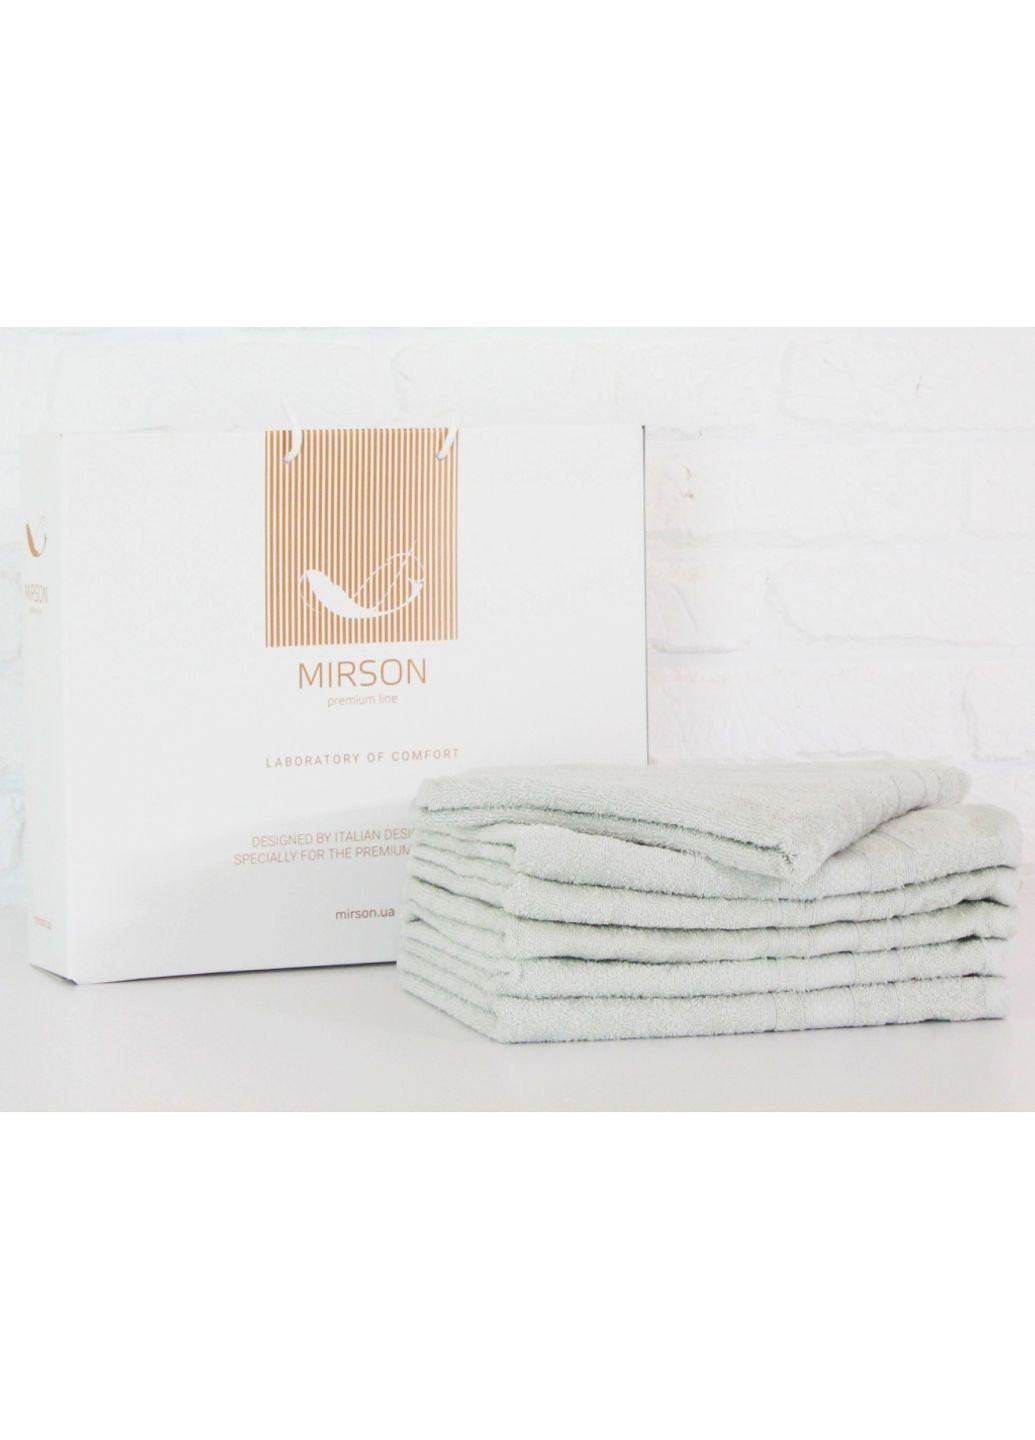 Mirson полотенце набор банных №5078 elite softness menthol 70х140 6 шт (2200003524185) мятный производство - Украина